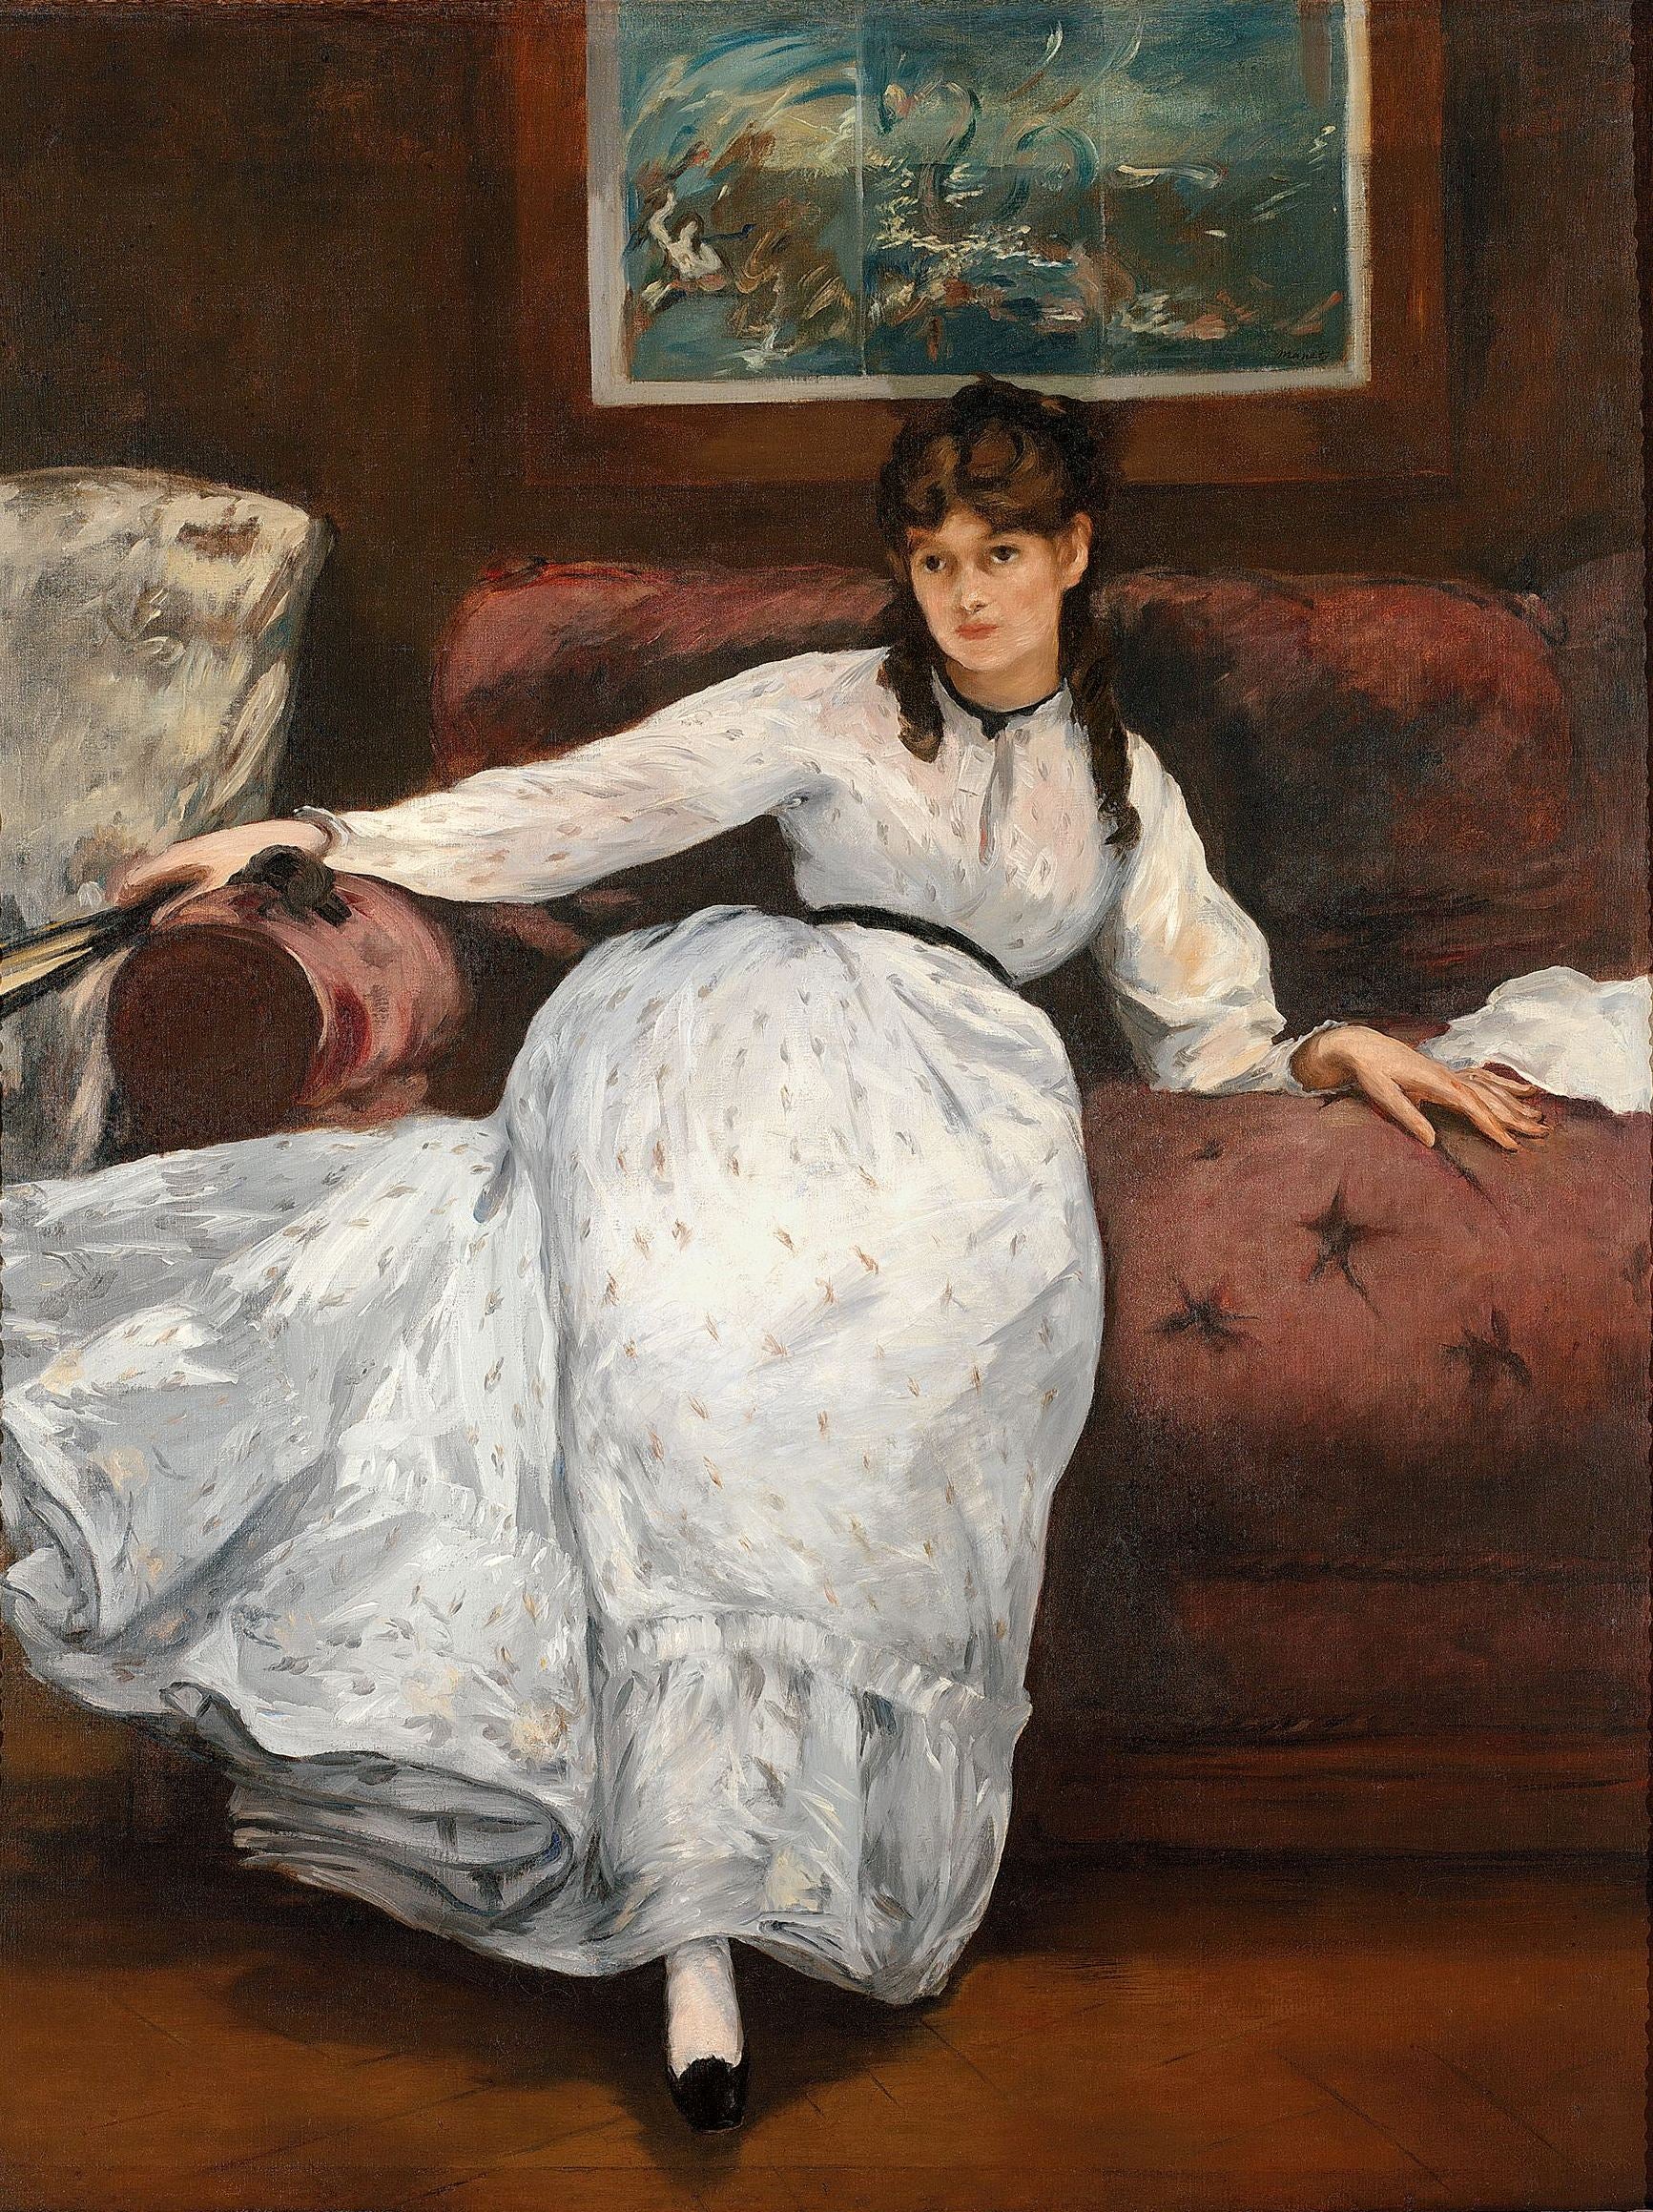 Le Repos - Edouard Manet